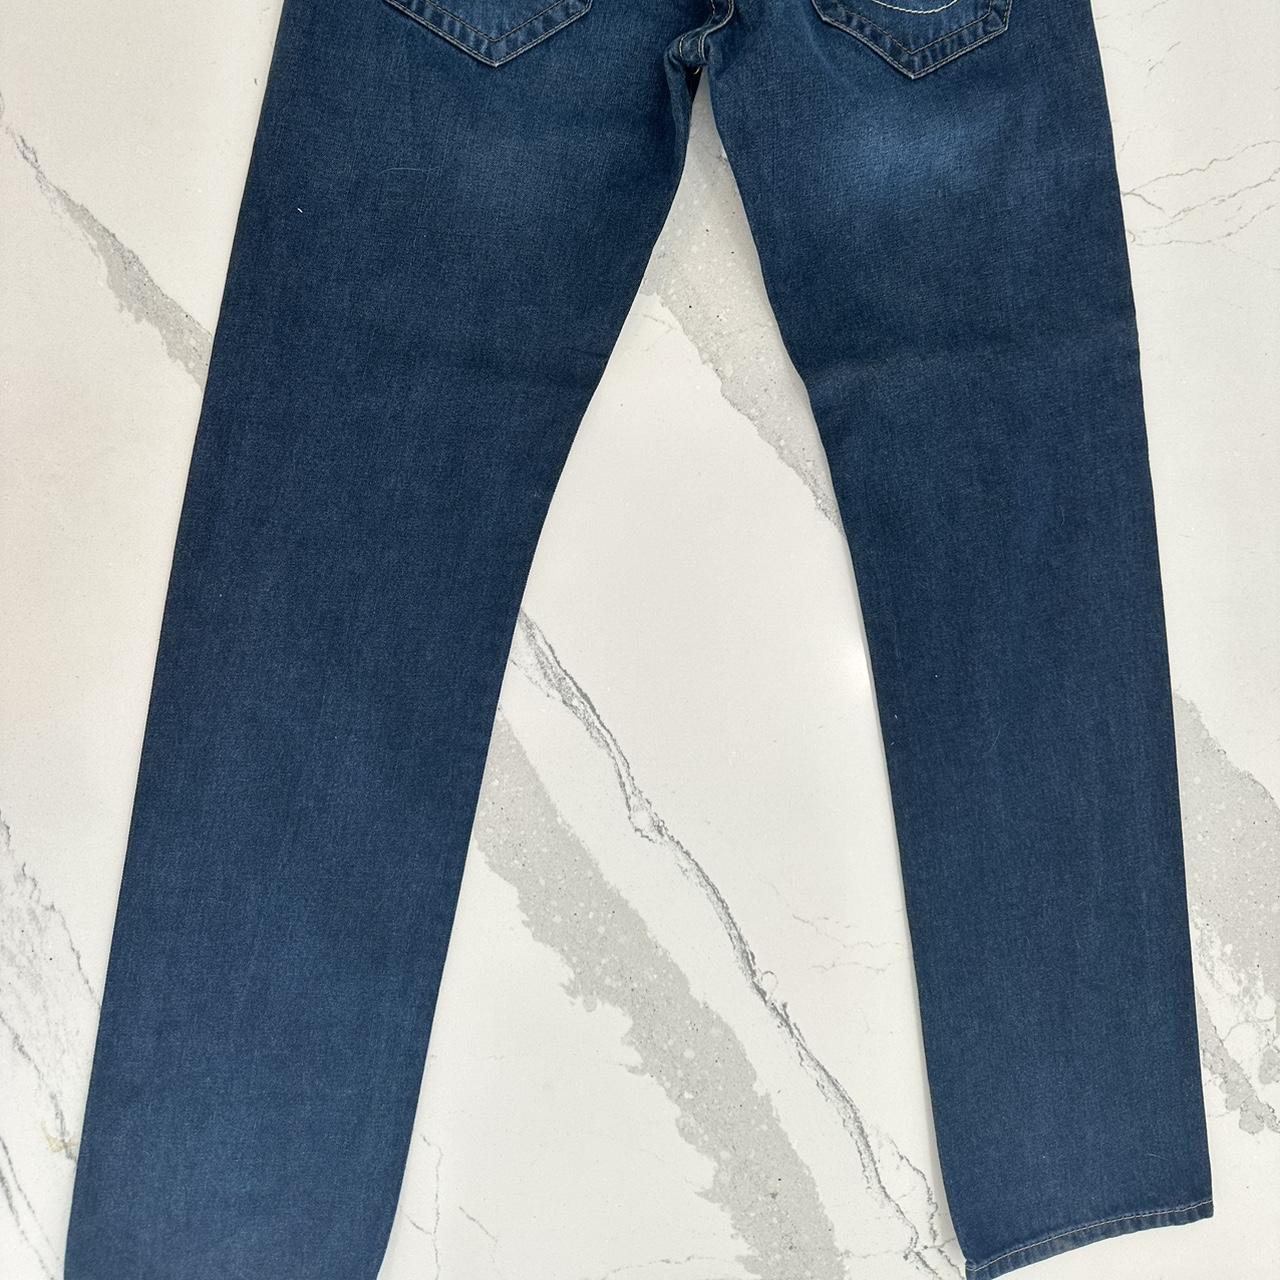 True religion men’s jeans straight fit - Depop